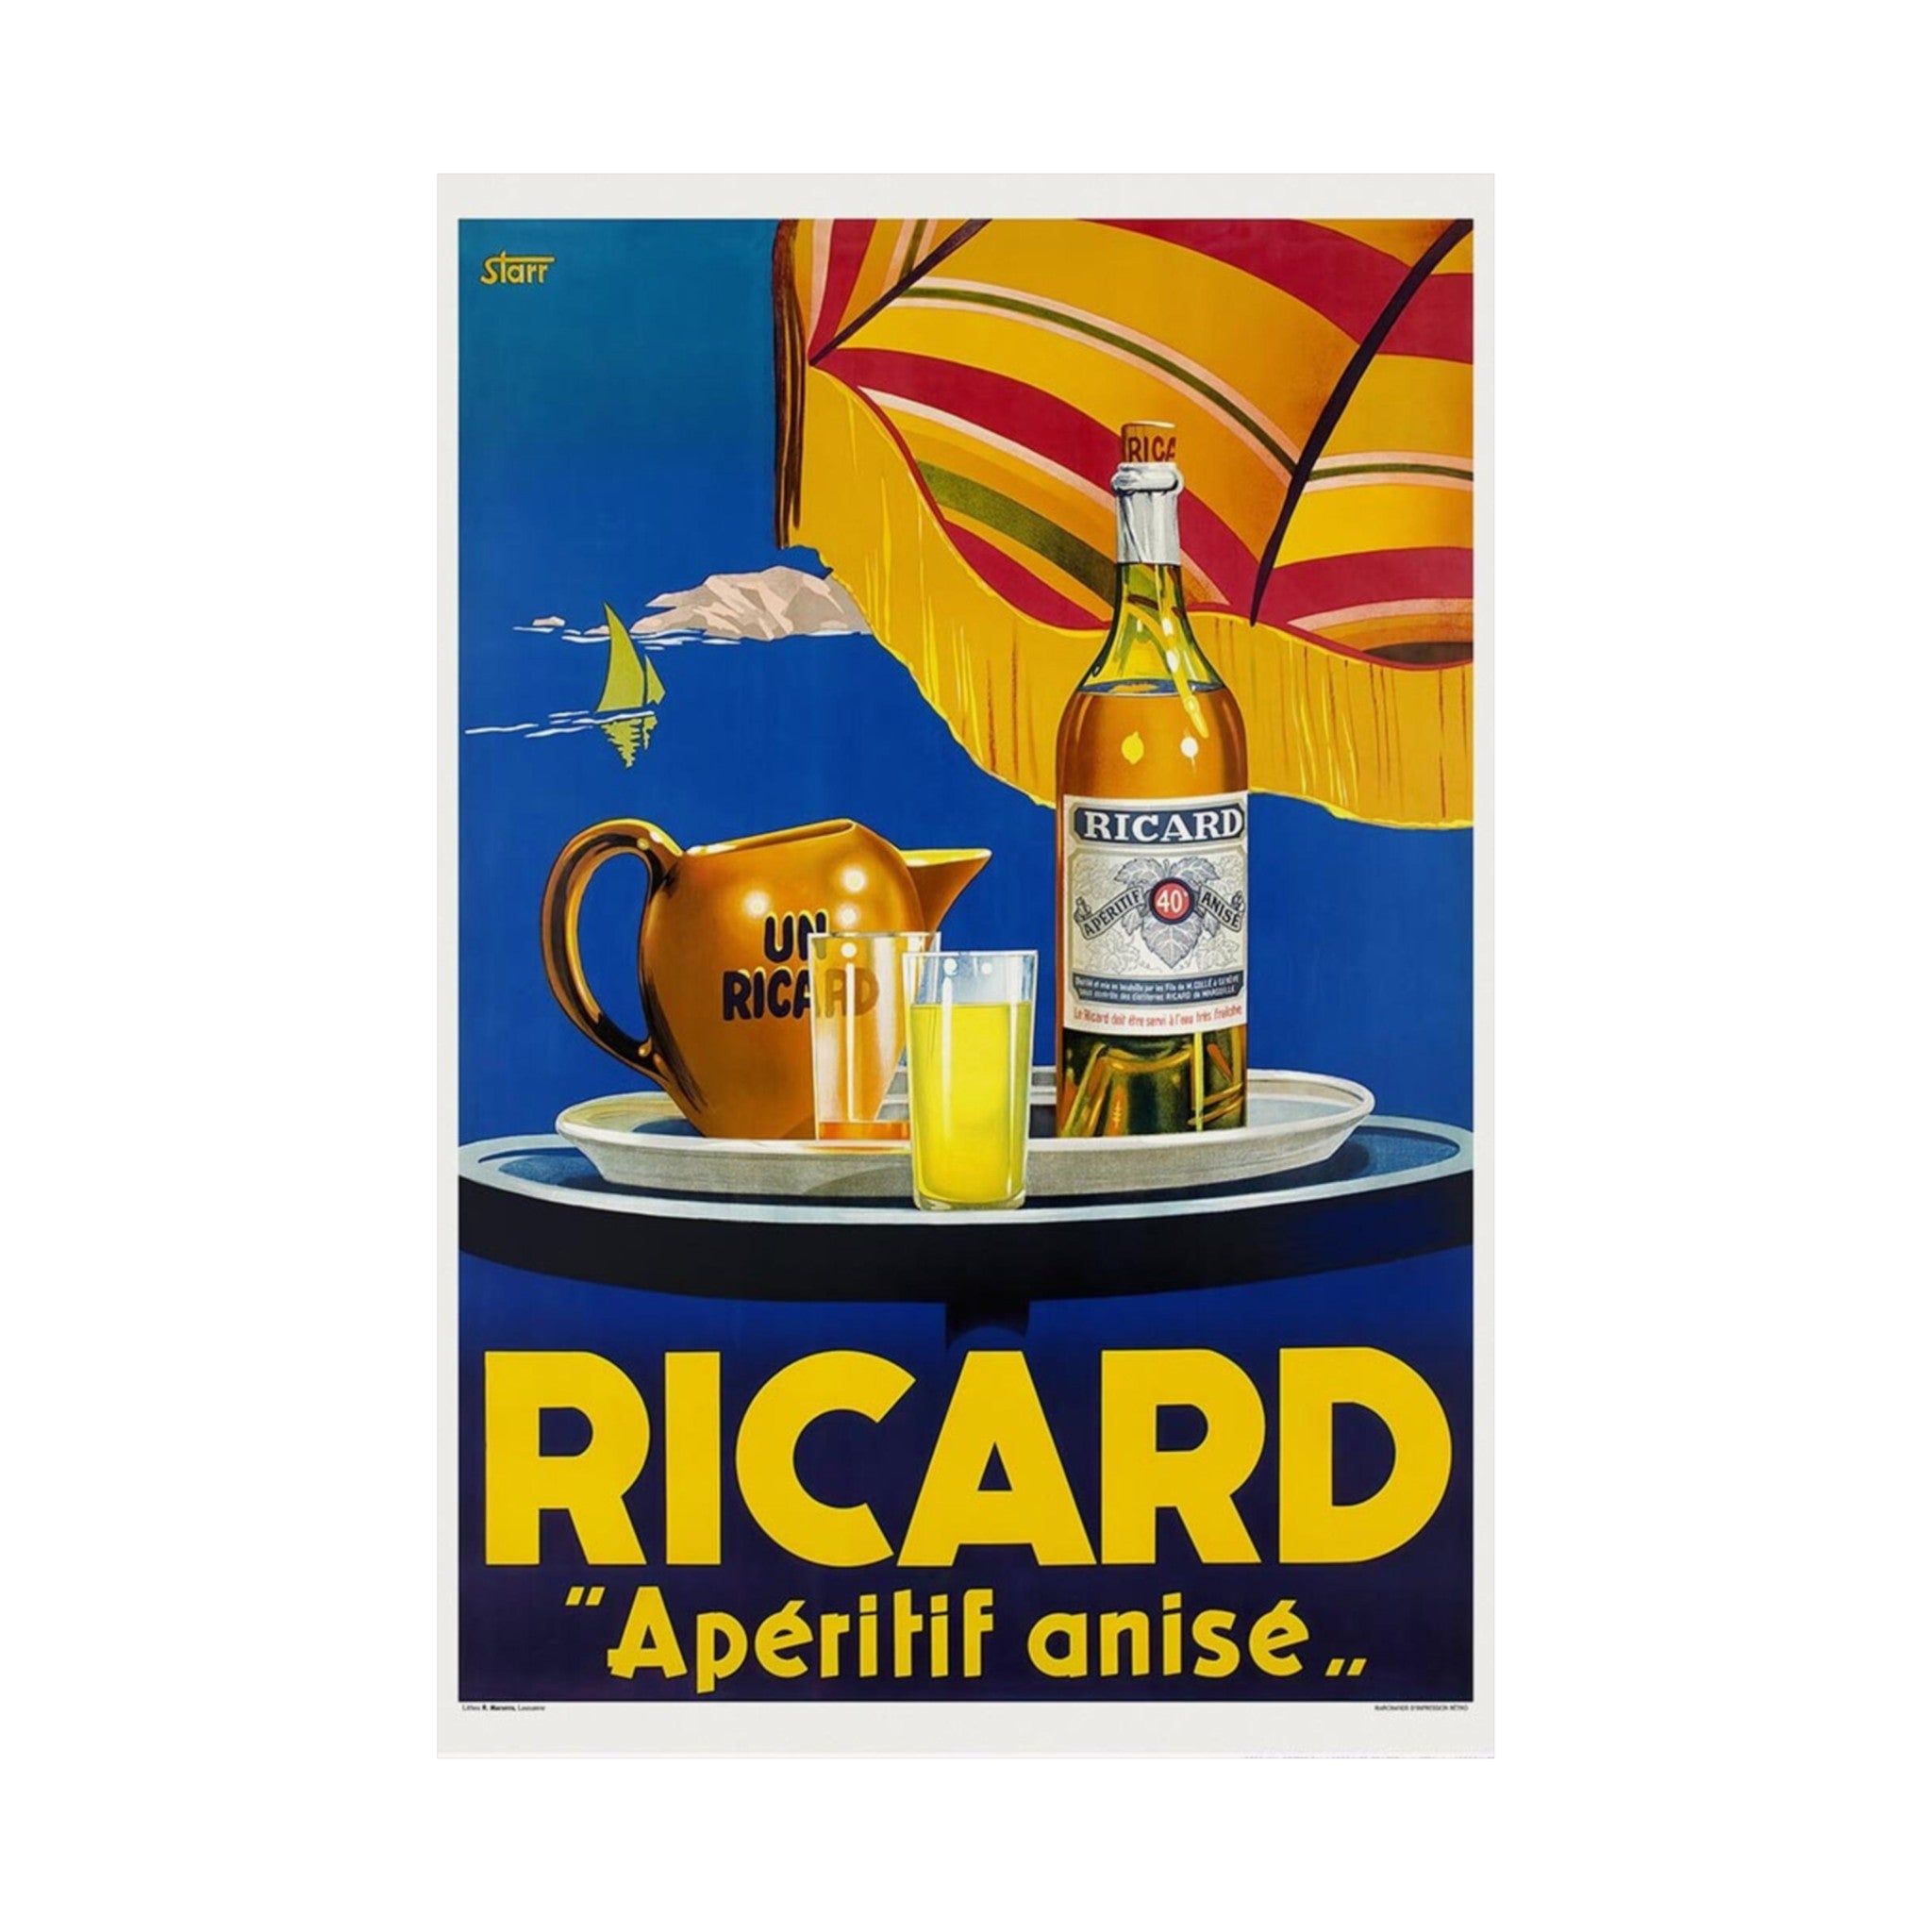 Ricard Aperitif Vintage Poster Print | Wall Art | Retro Advertising Print | French Prints | Food Prints | Kitchen Decor | Ricard | Aperitive